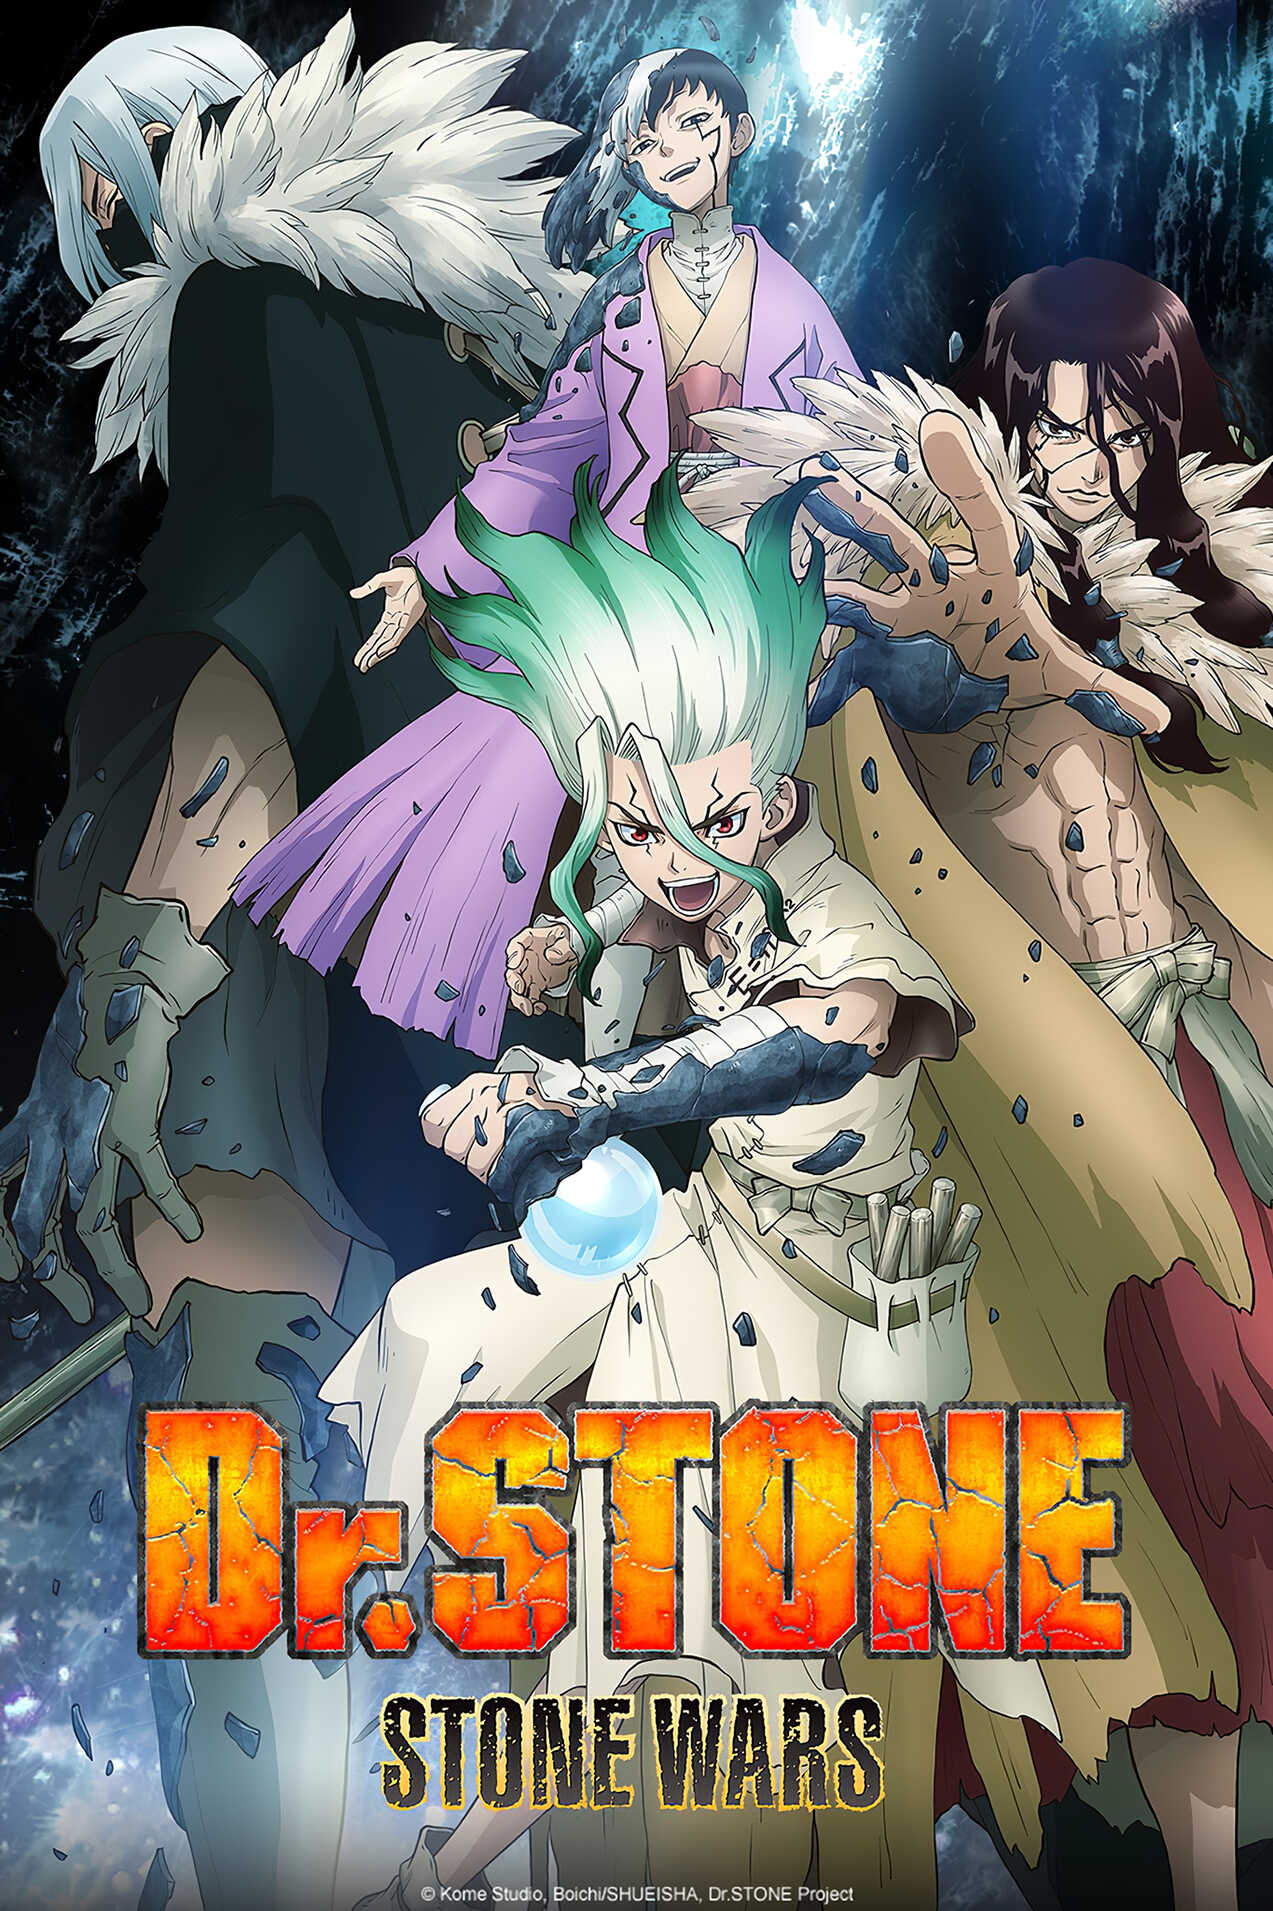 Dr. STONE Manga Reaches 13 Million Copies in Circulation